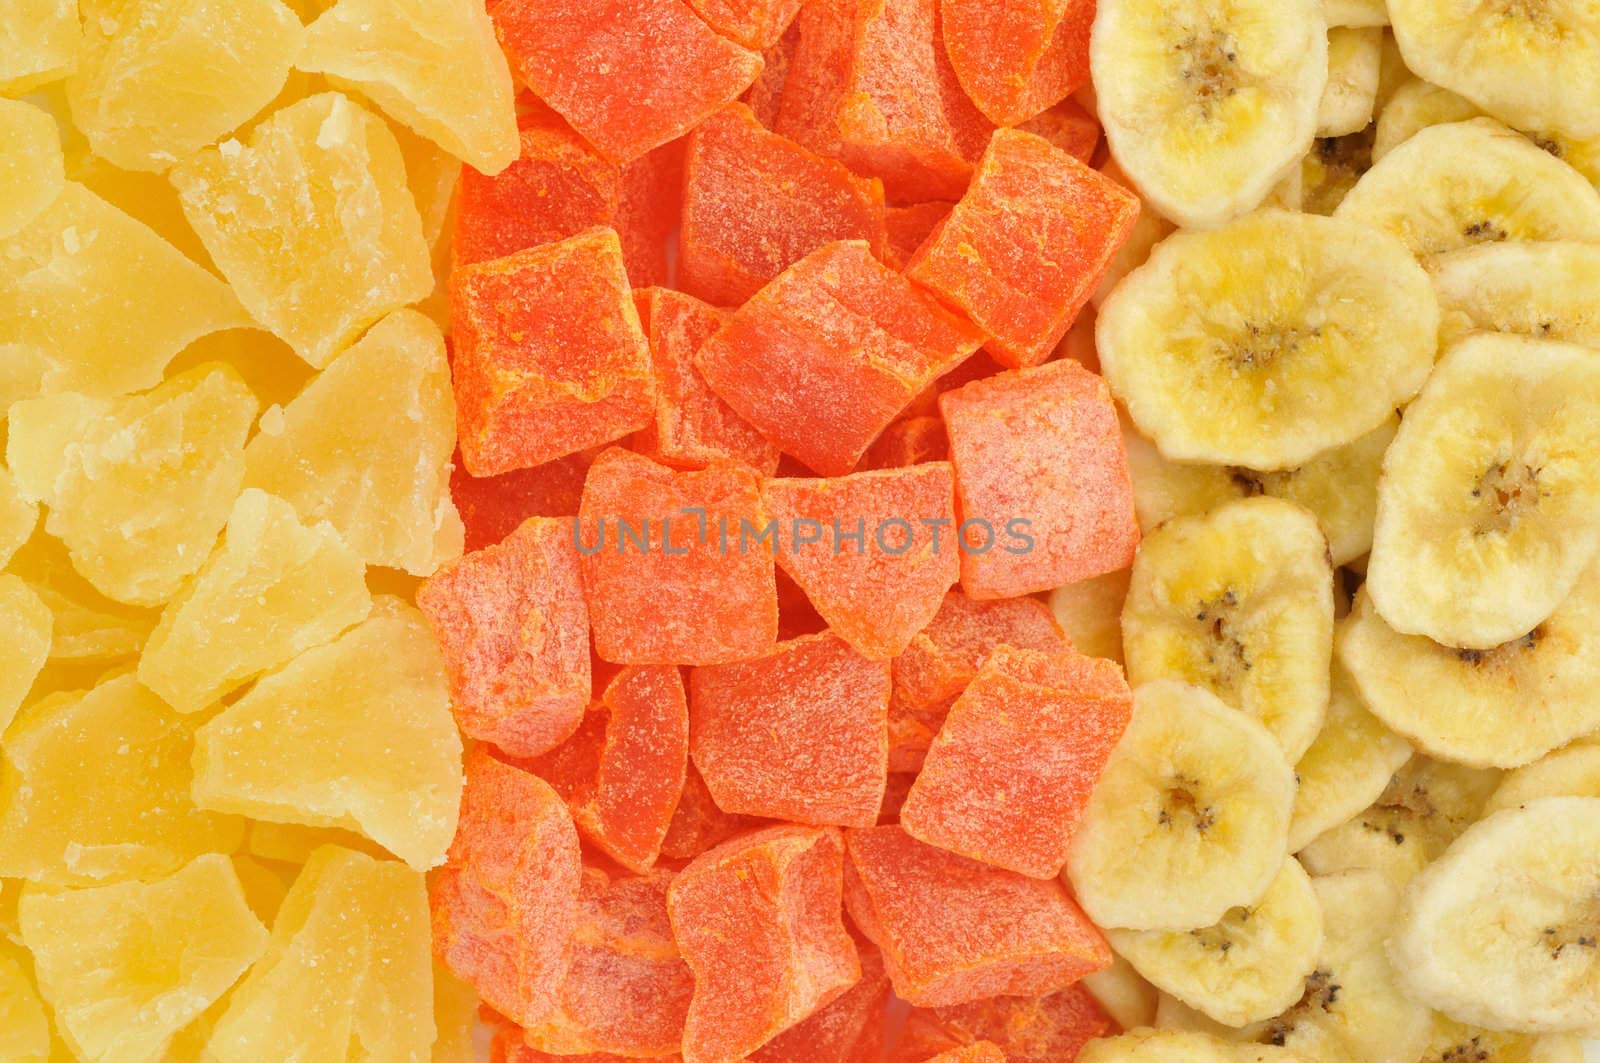 Top view of dried papaya, pineapple and banana slices